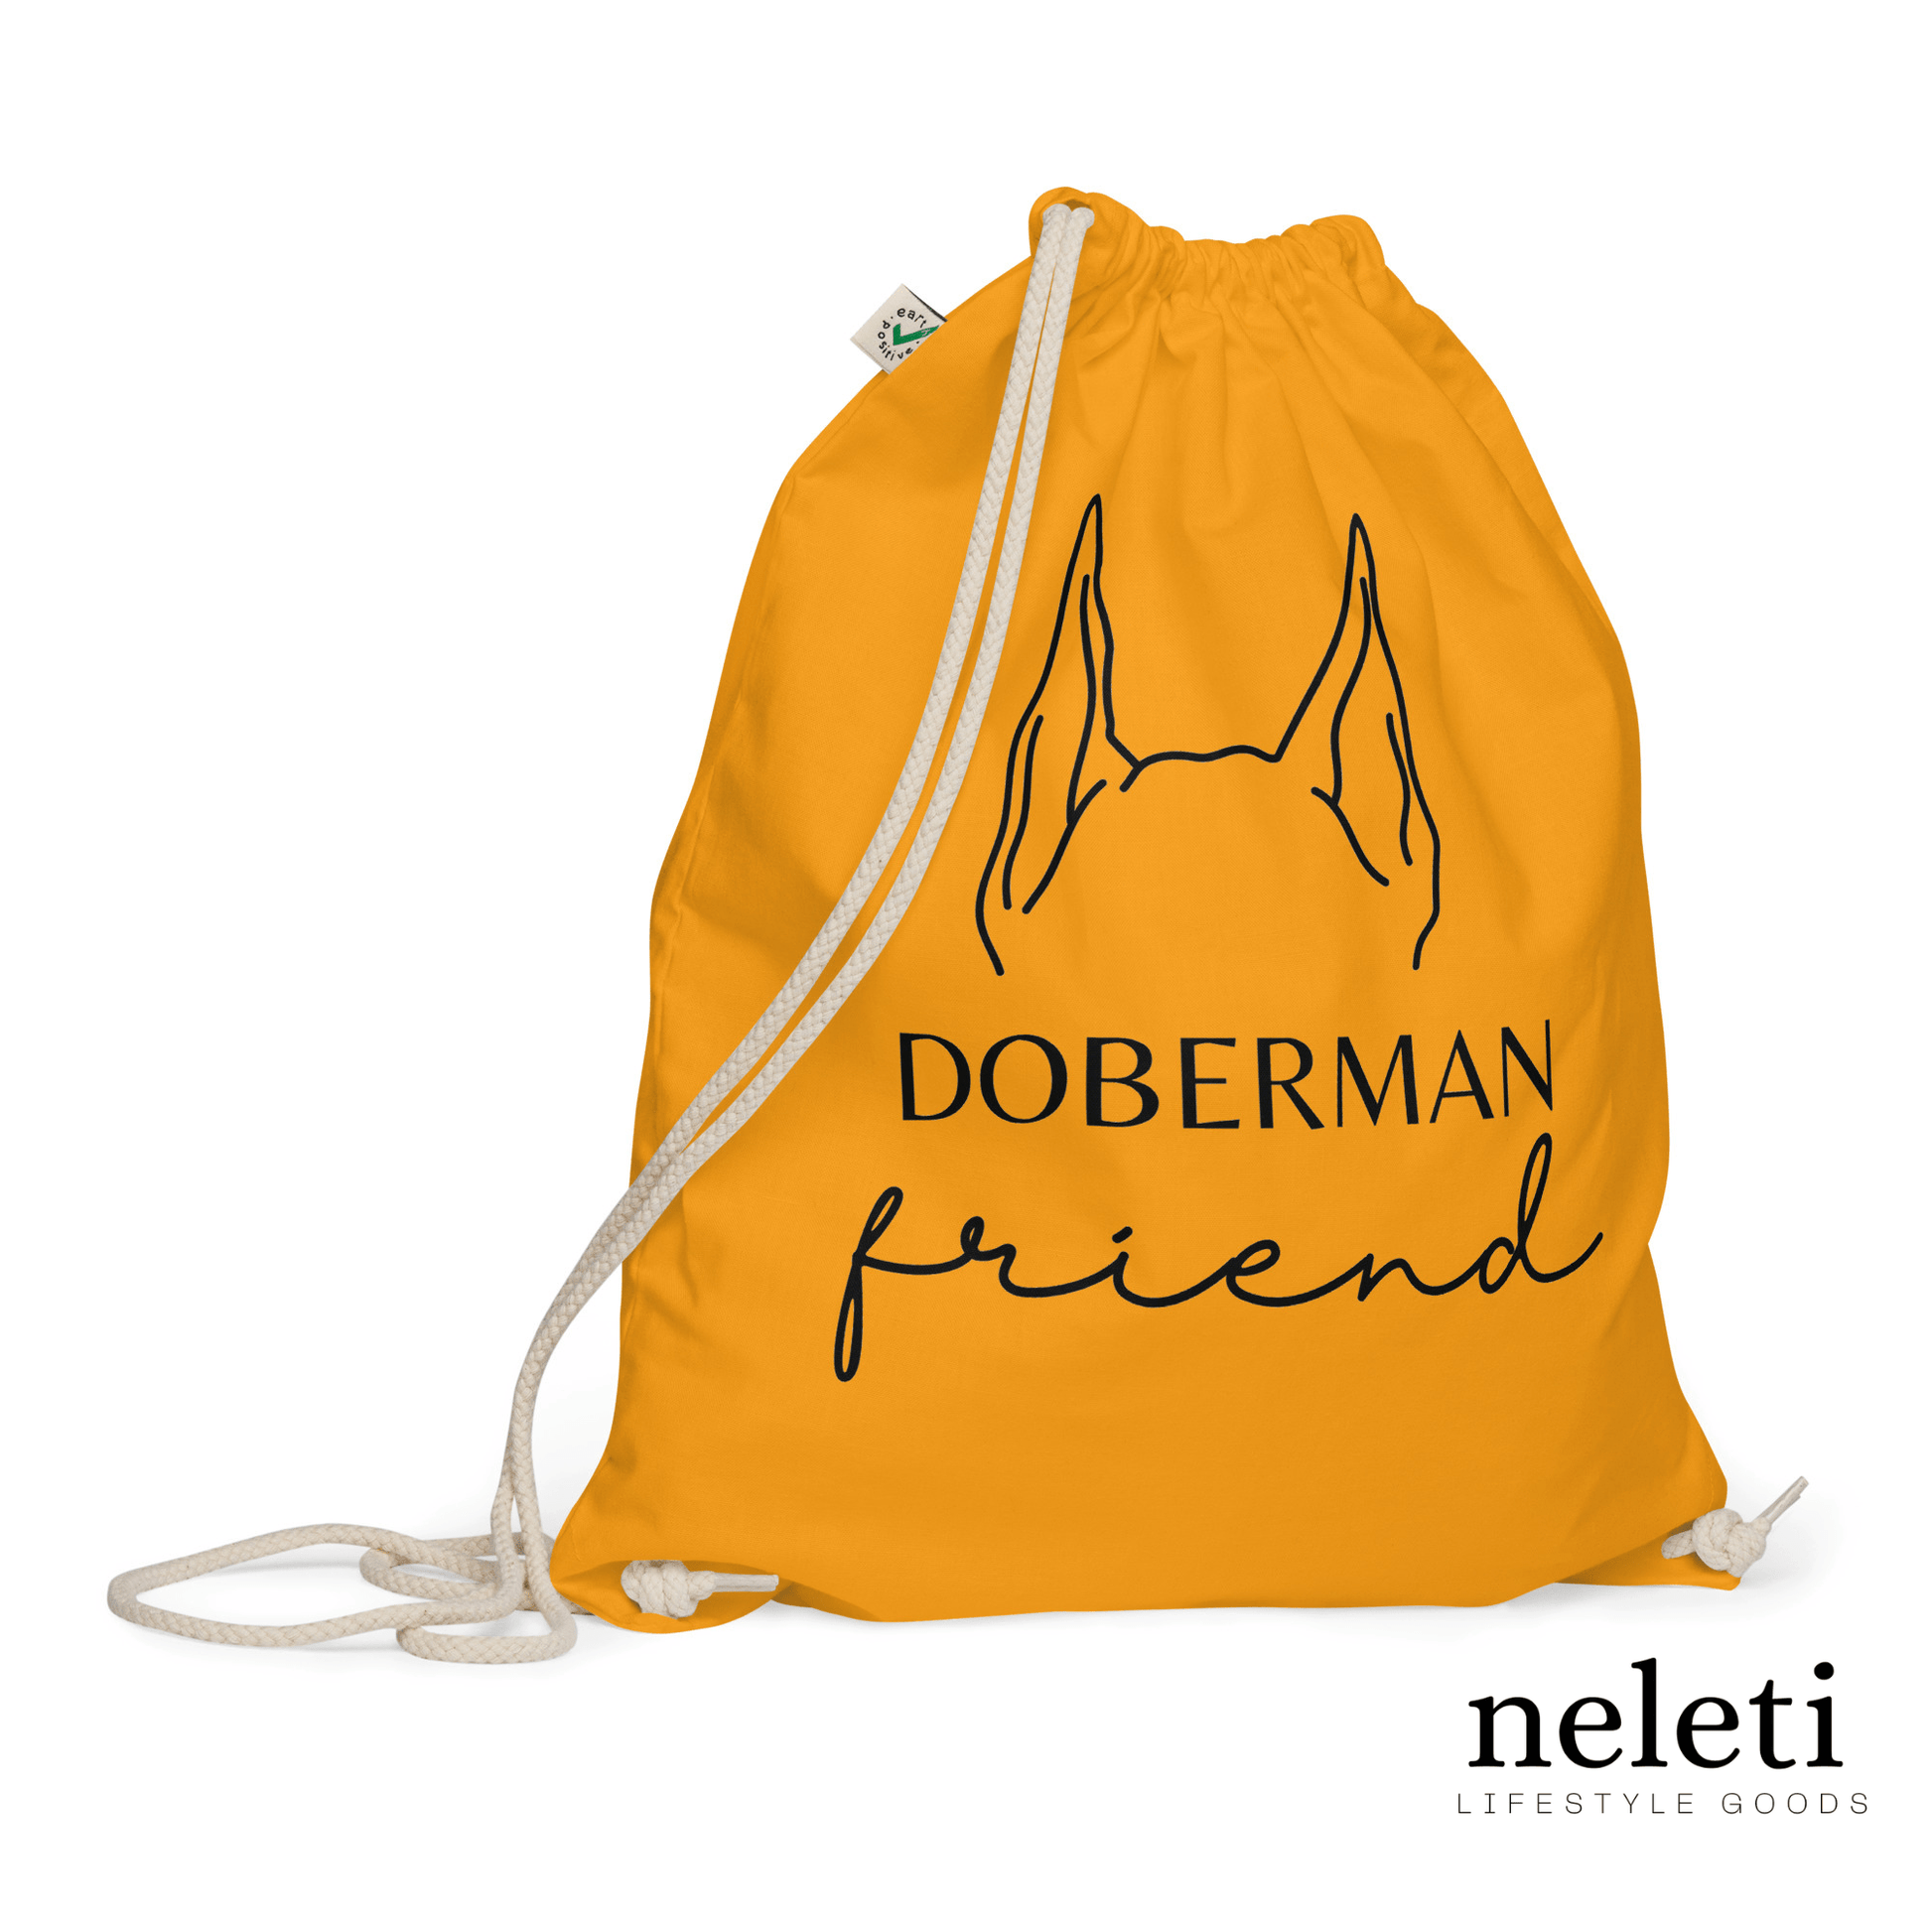 neleti.com-Dog-Ears-on-Gold-Organic-Cotton-Drawstring-Bag